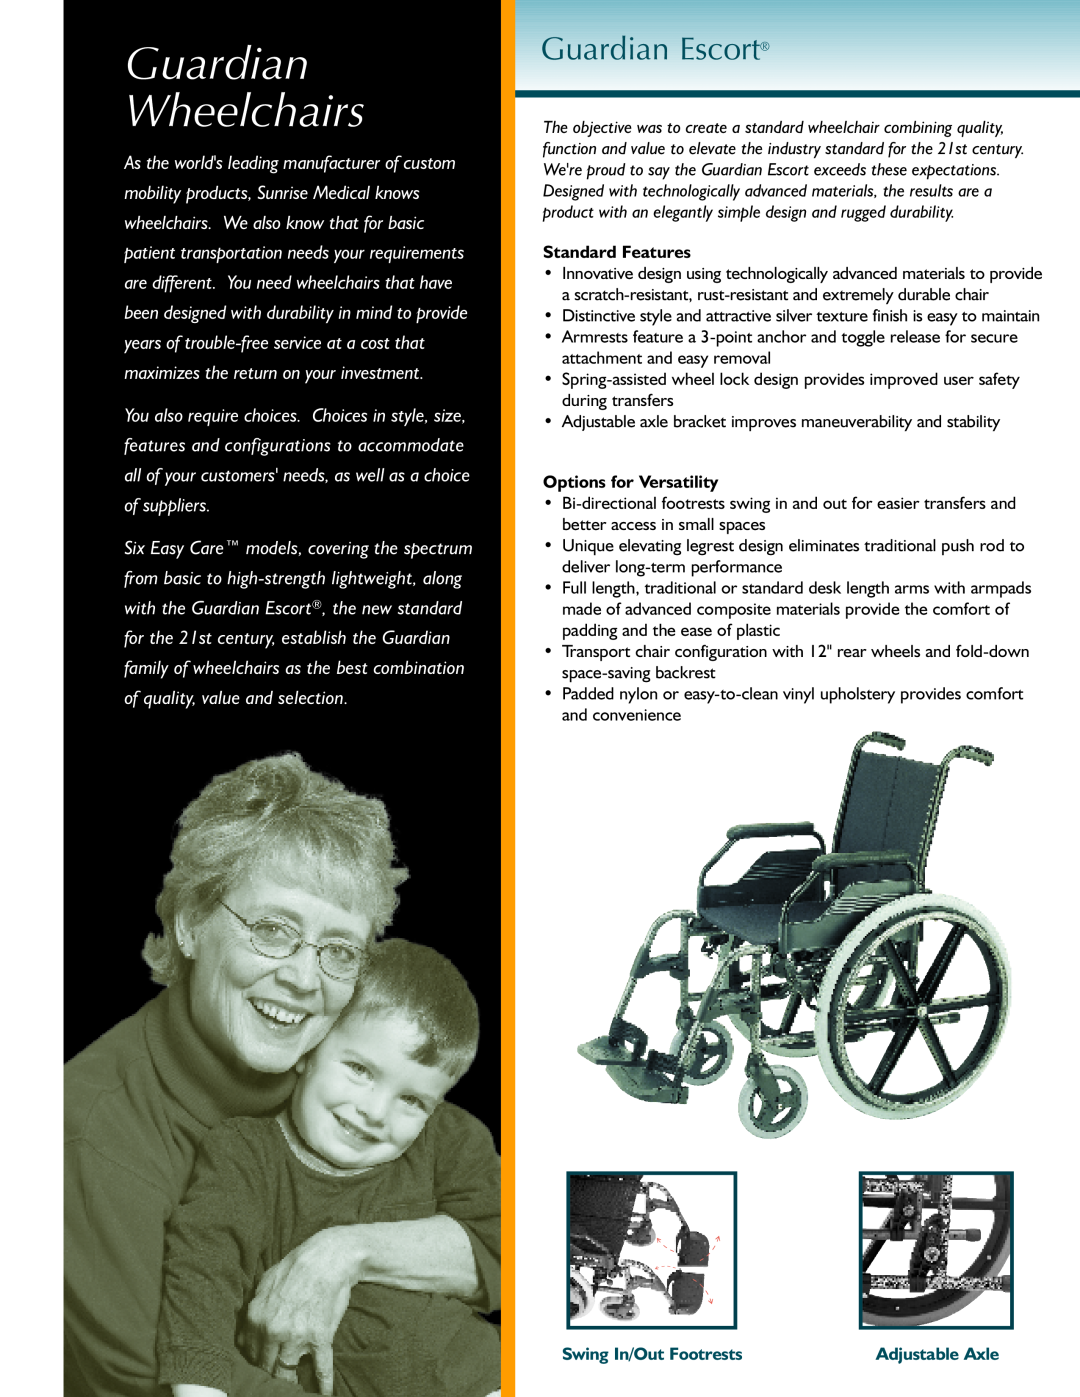 Sunrise Medical Wheelerchair manual Standard Features, Options for Versatility, Guardian Wheelchairs, Guardian Escort 